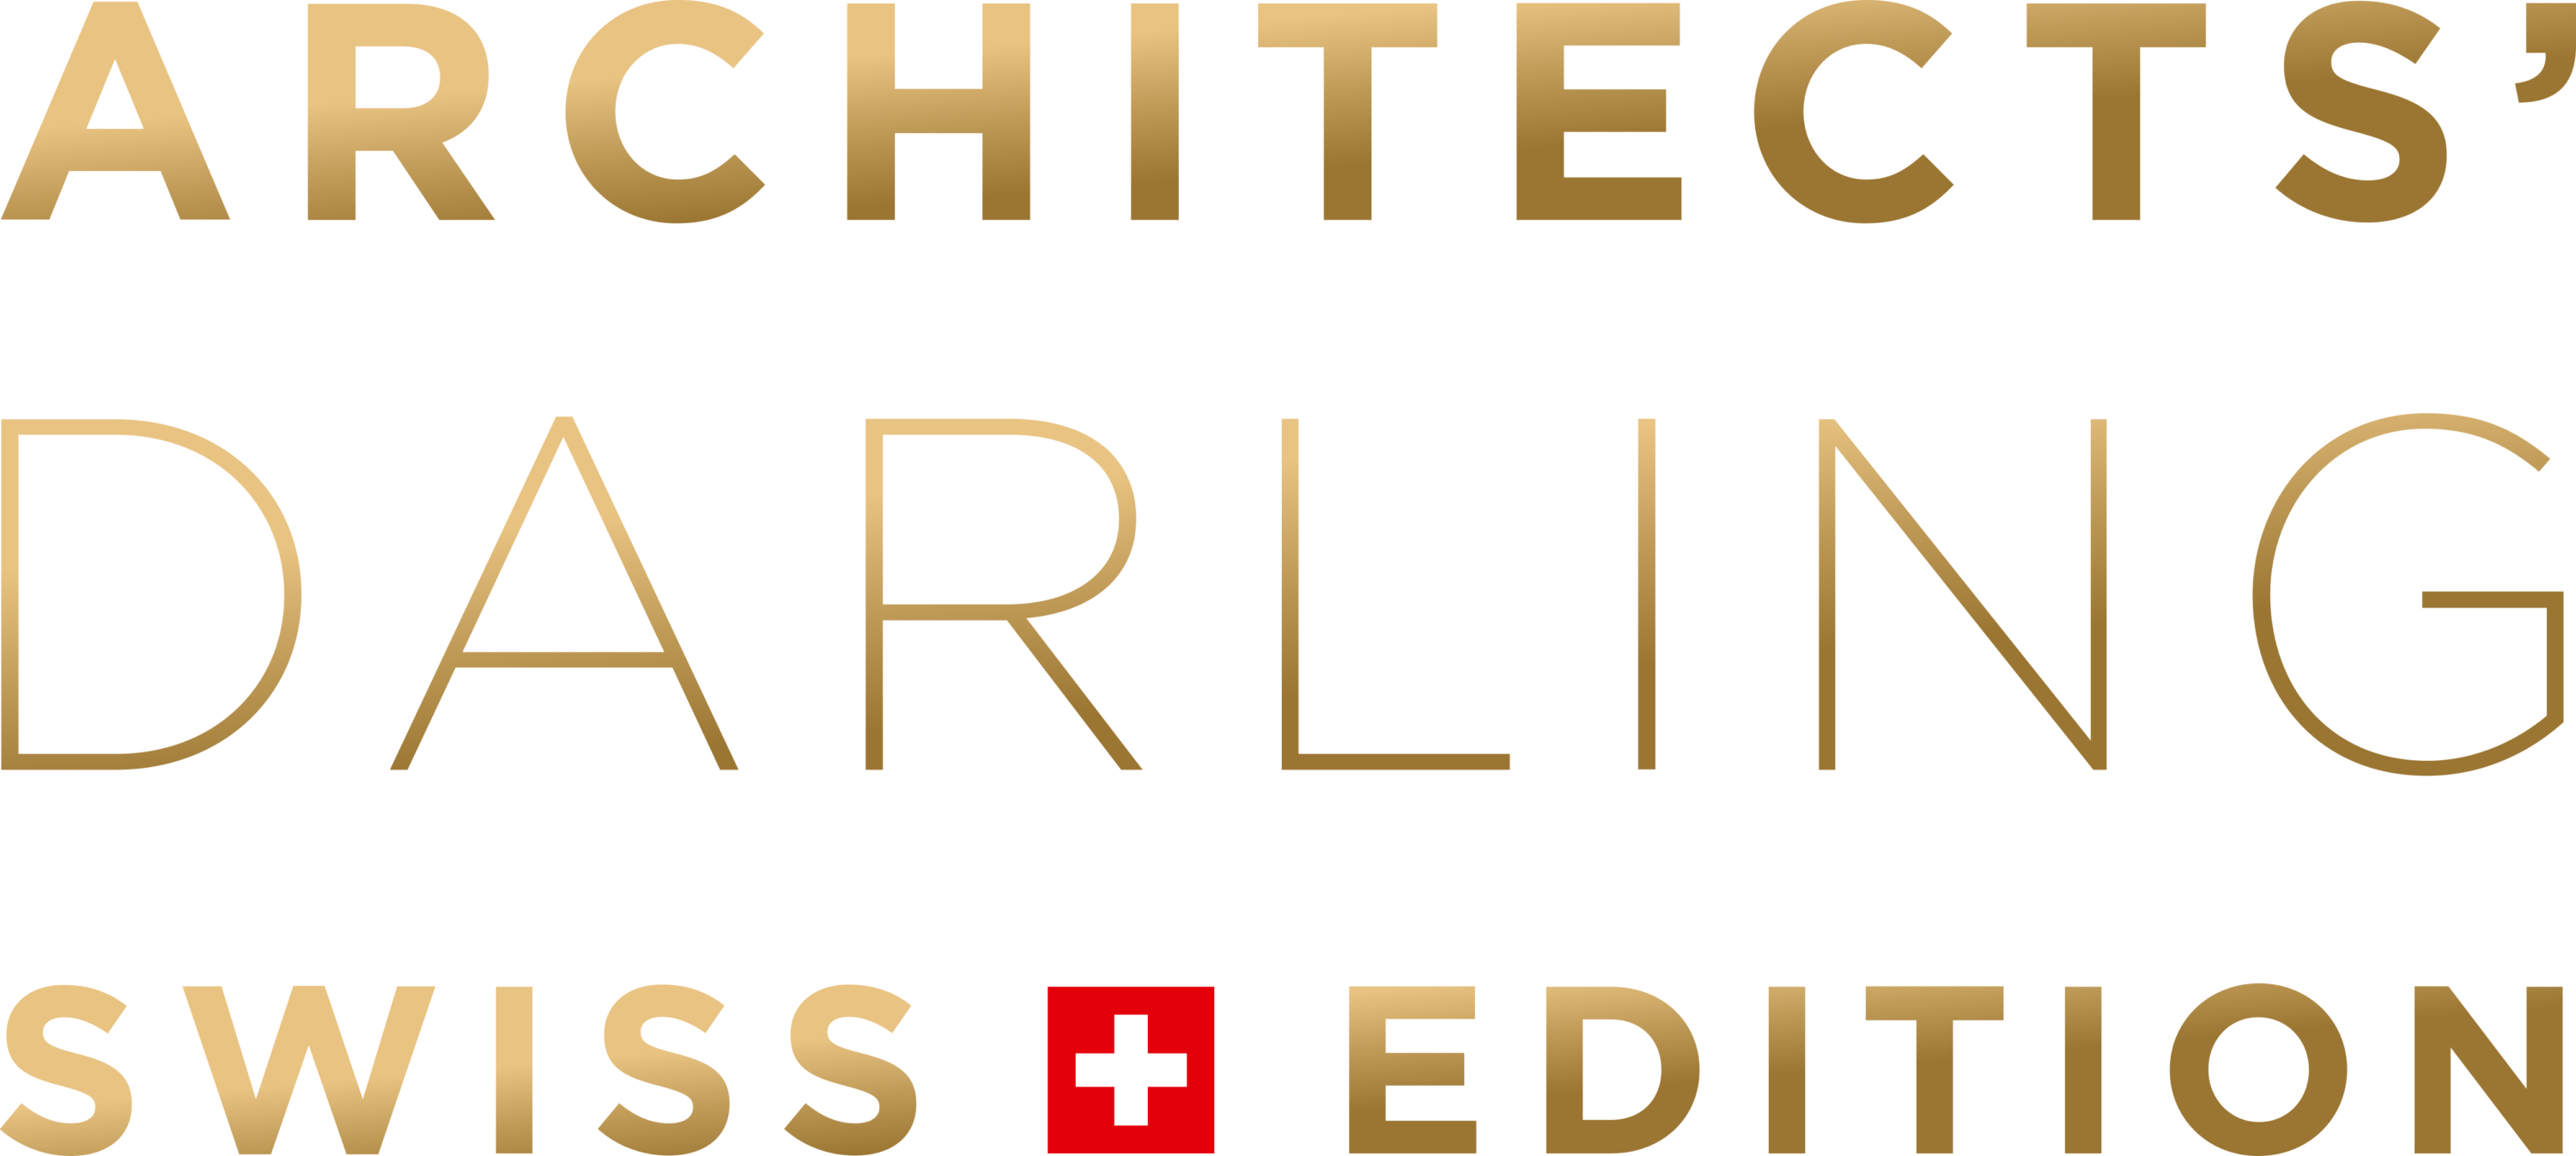 Architects Darling Swiss Edition Logo